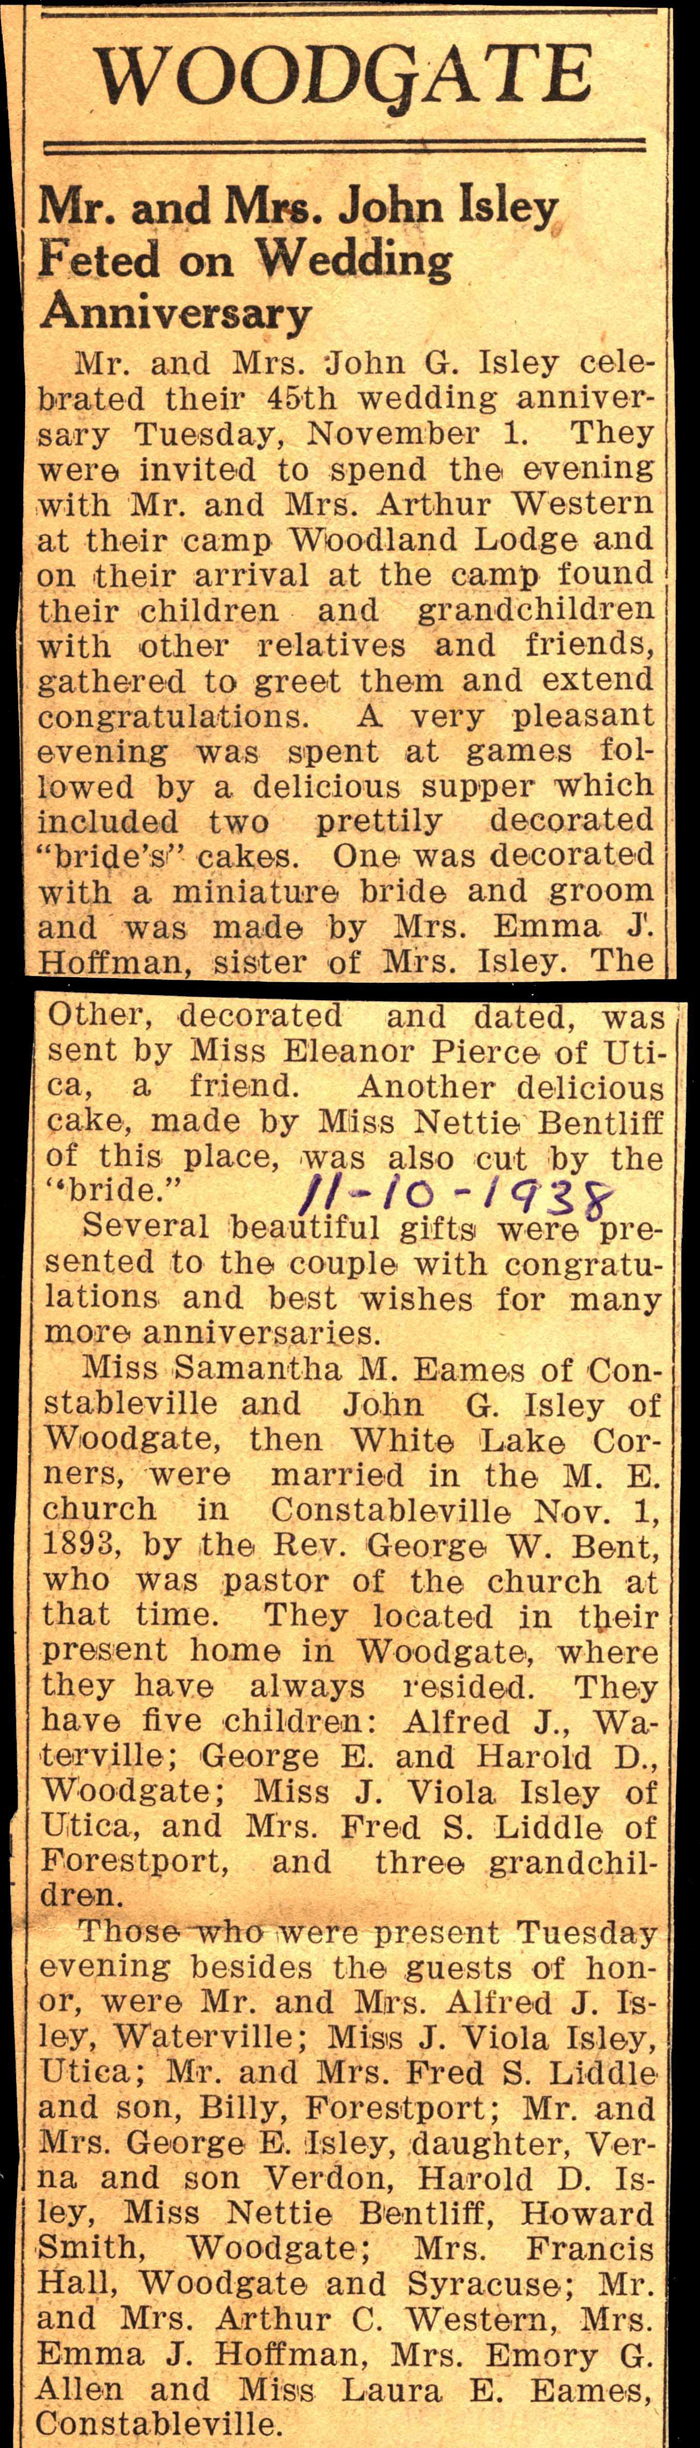 mr and mrs john g isley celebrate 45th wedding anniversary november 1 1938